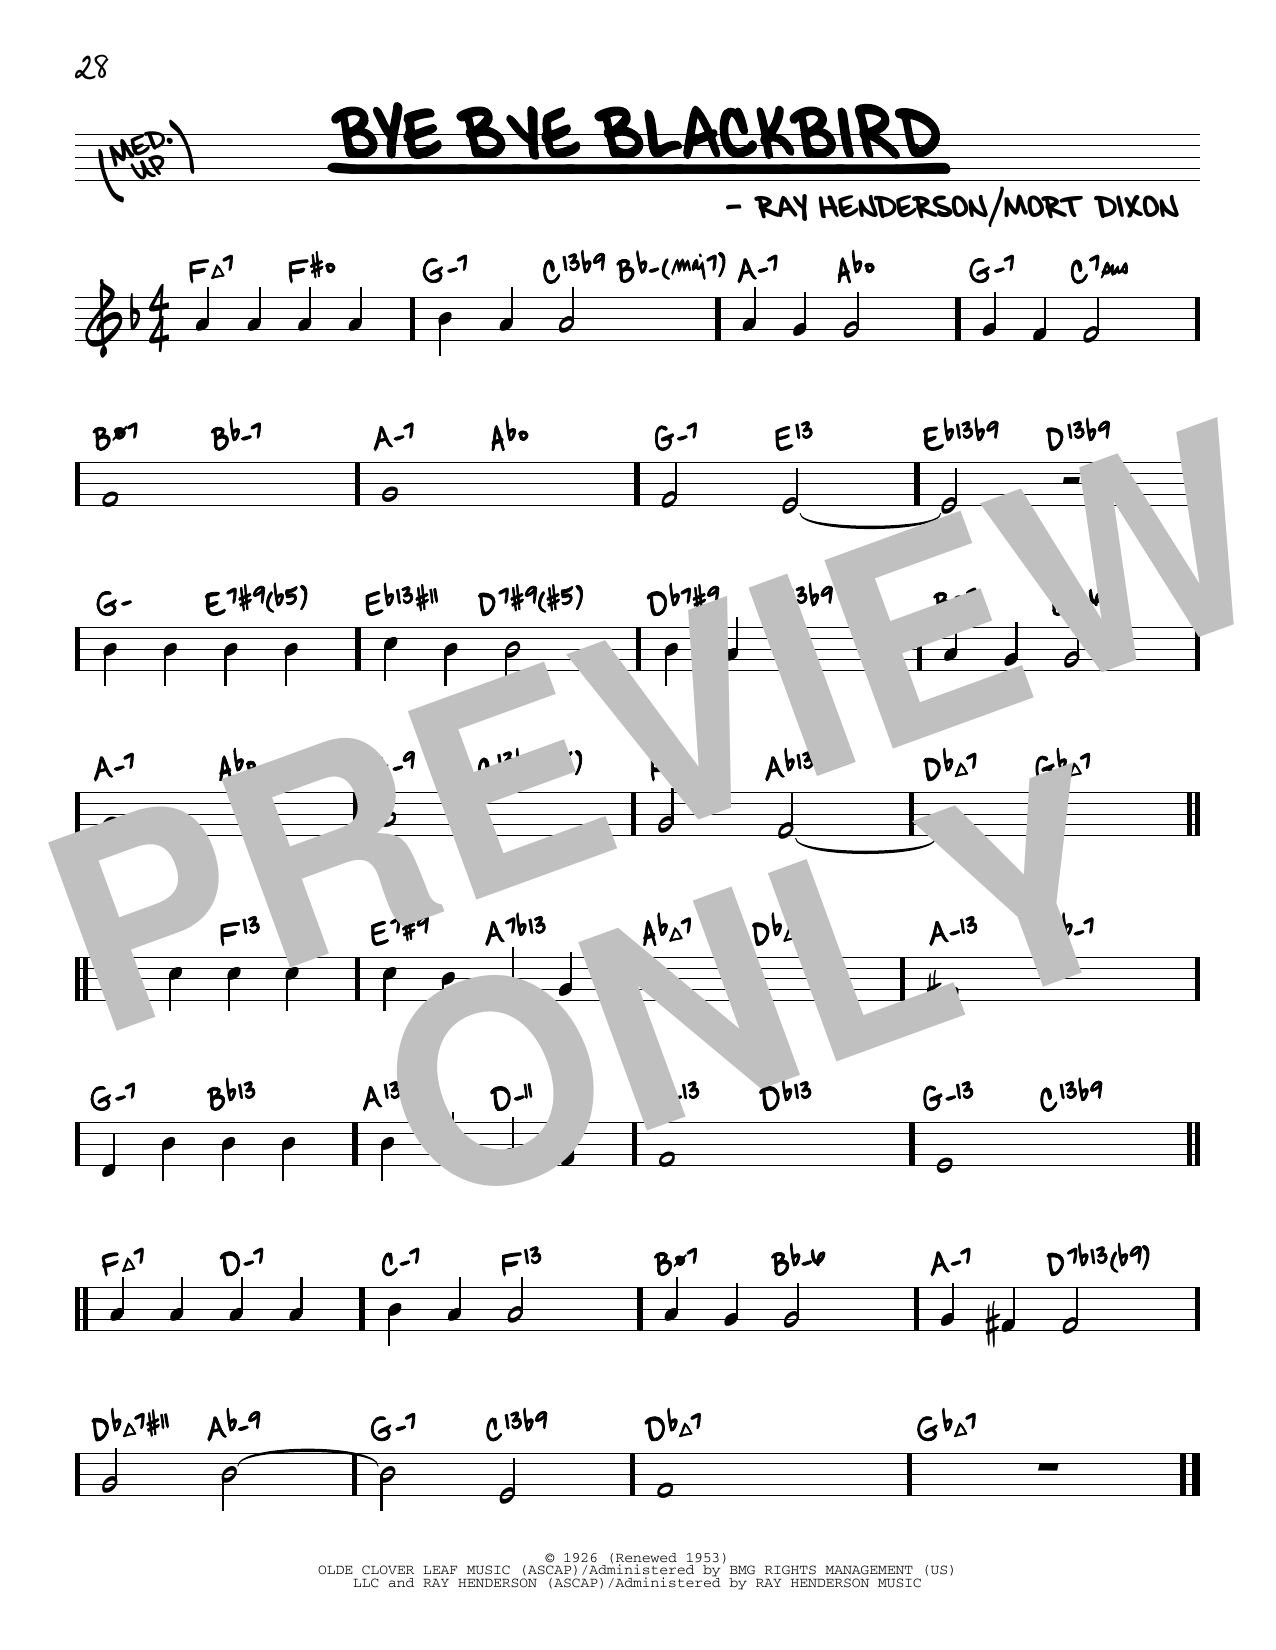 Ray Henderson Bye Bye Blackbird (arr. David Hazeltine) Sheet Music Notes & Chords for Real Book – Enhanced Chords - Download or Print PDF